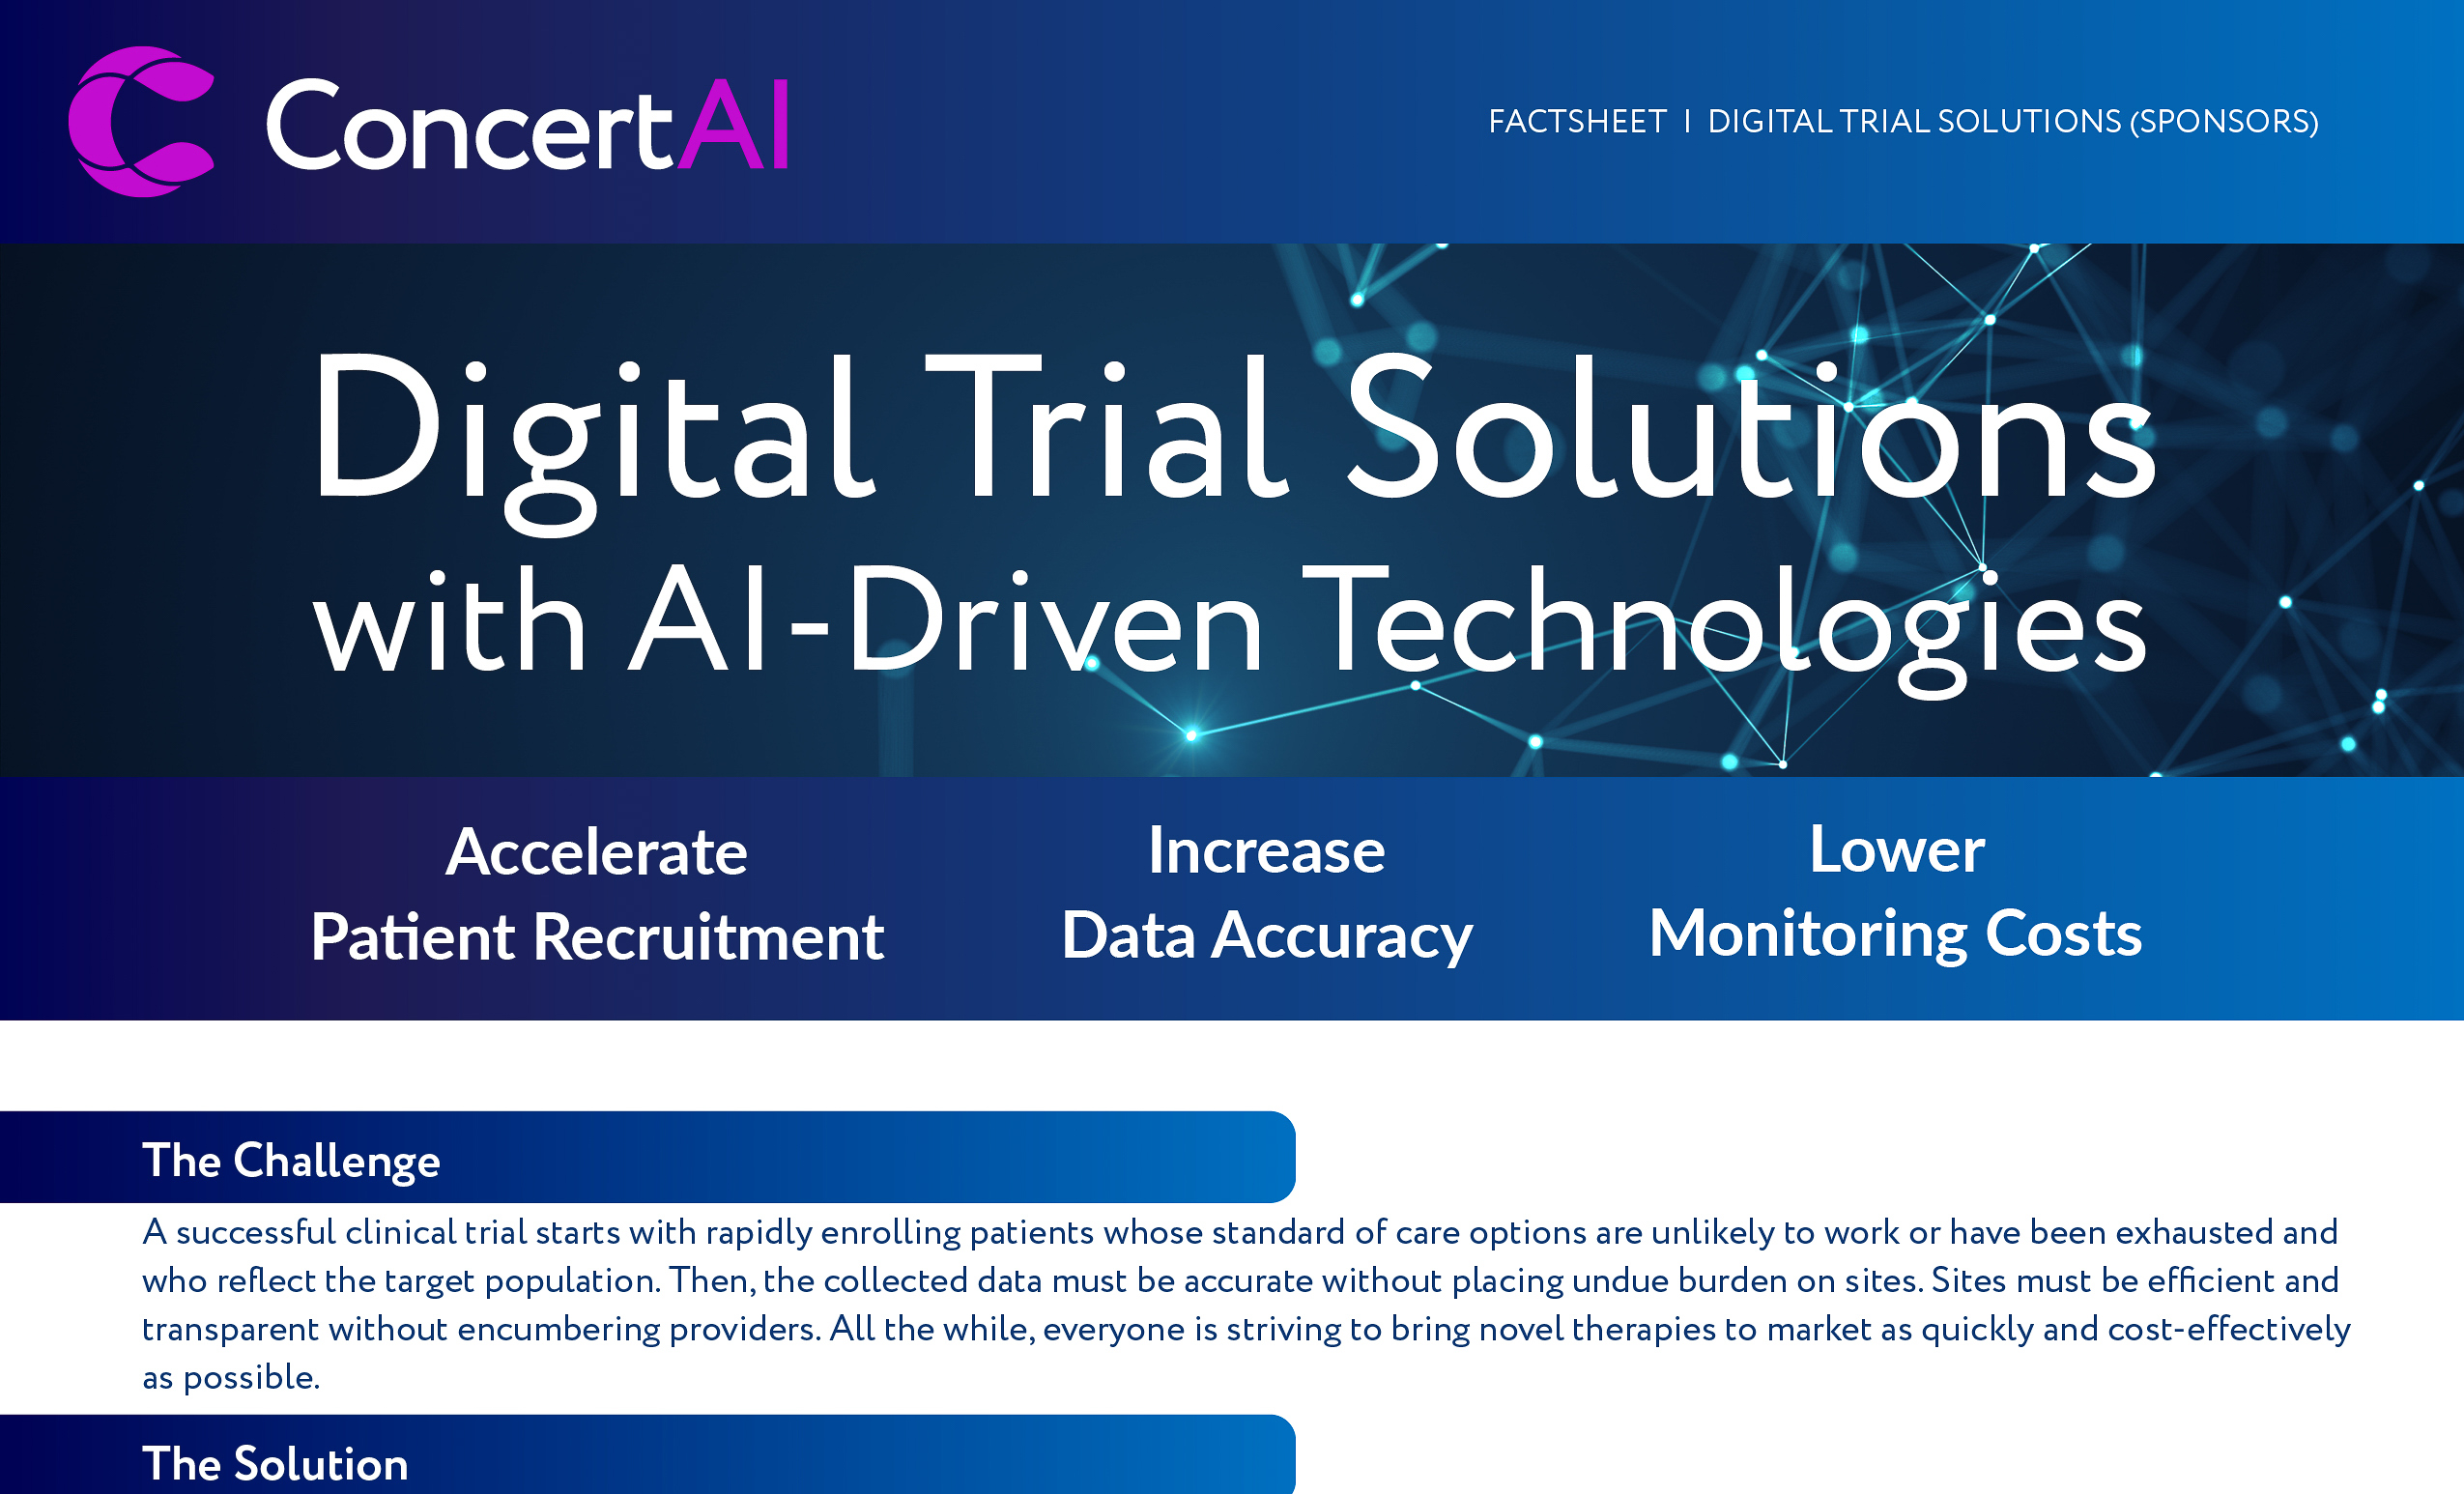 Digital Trial Solutions for Sponsors